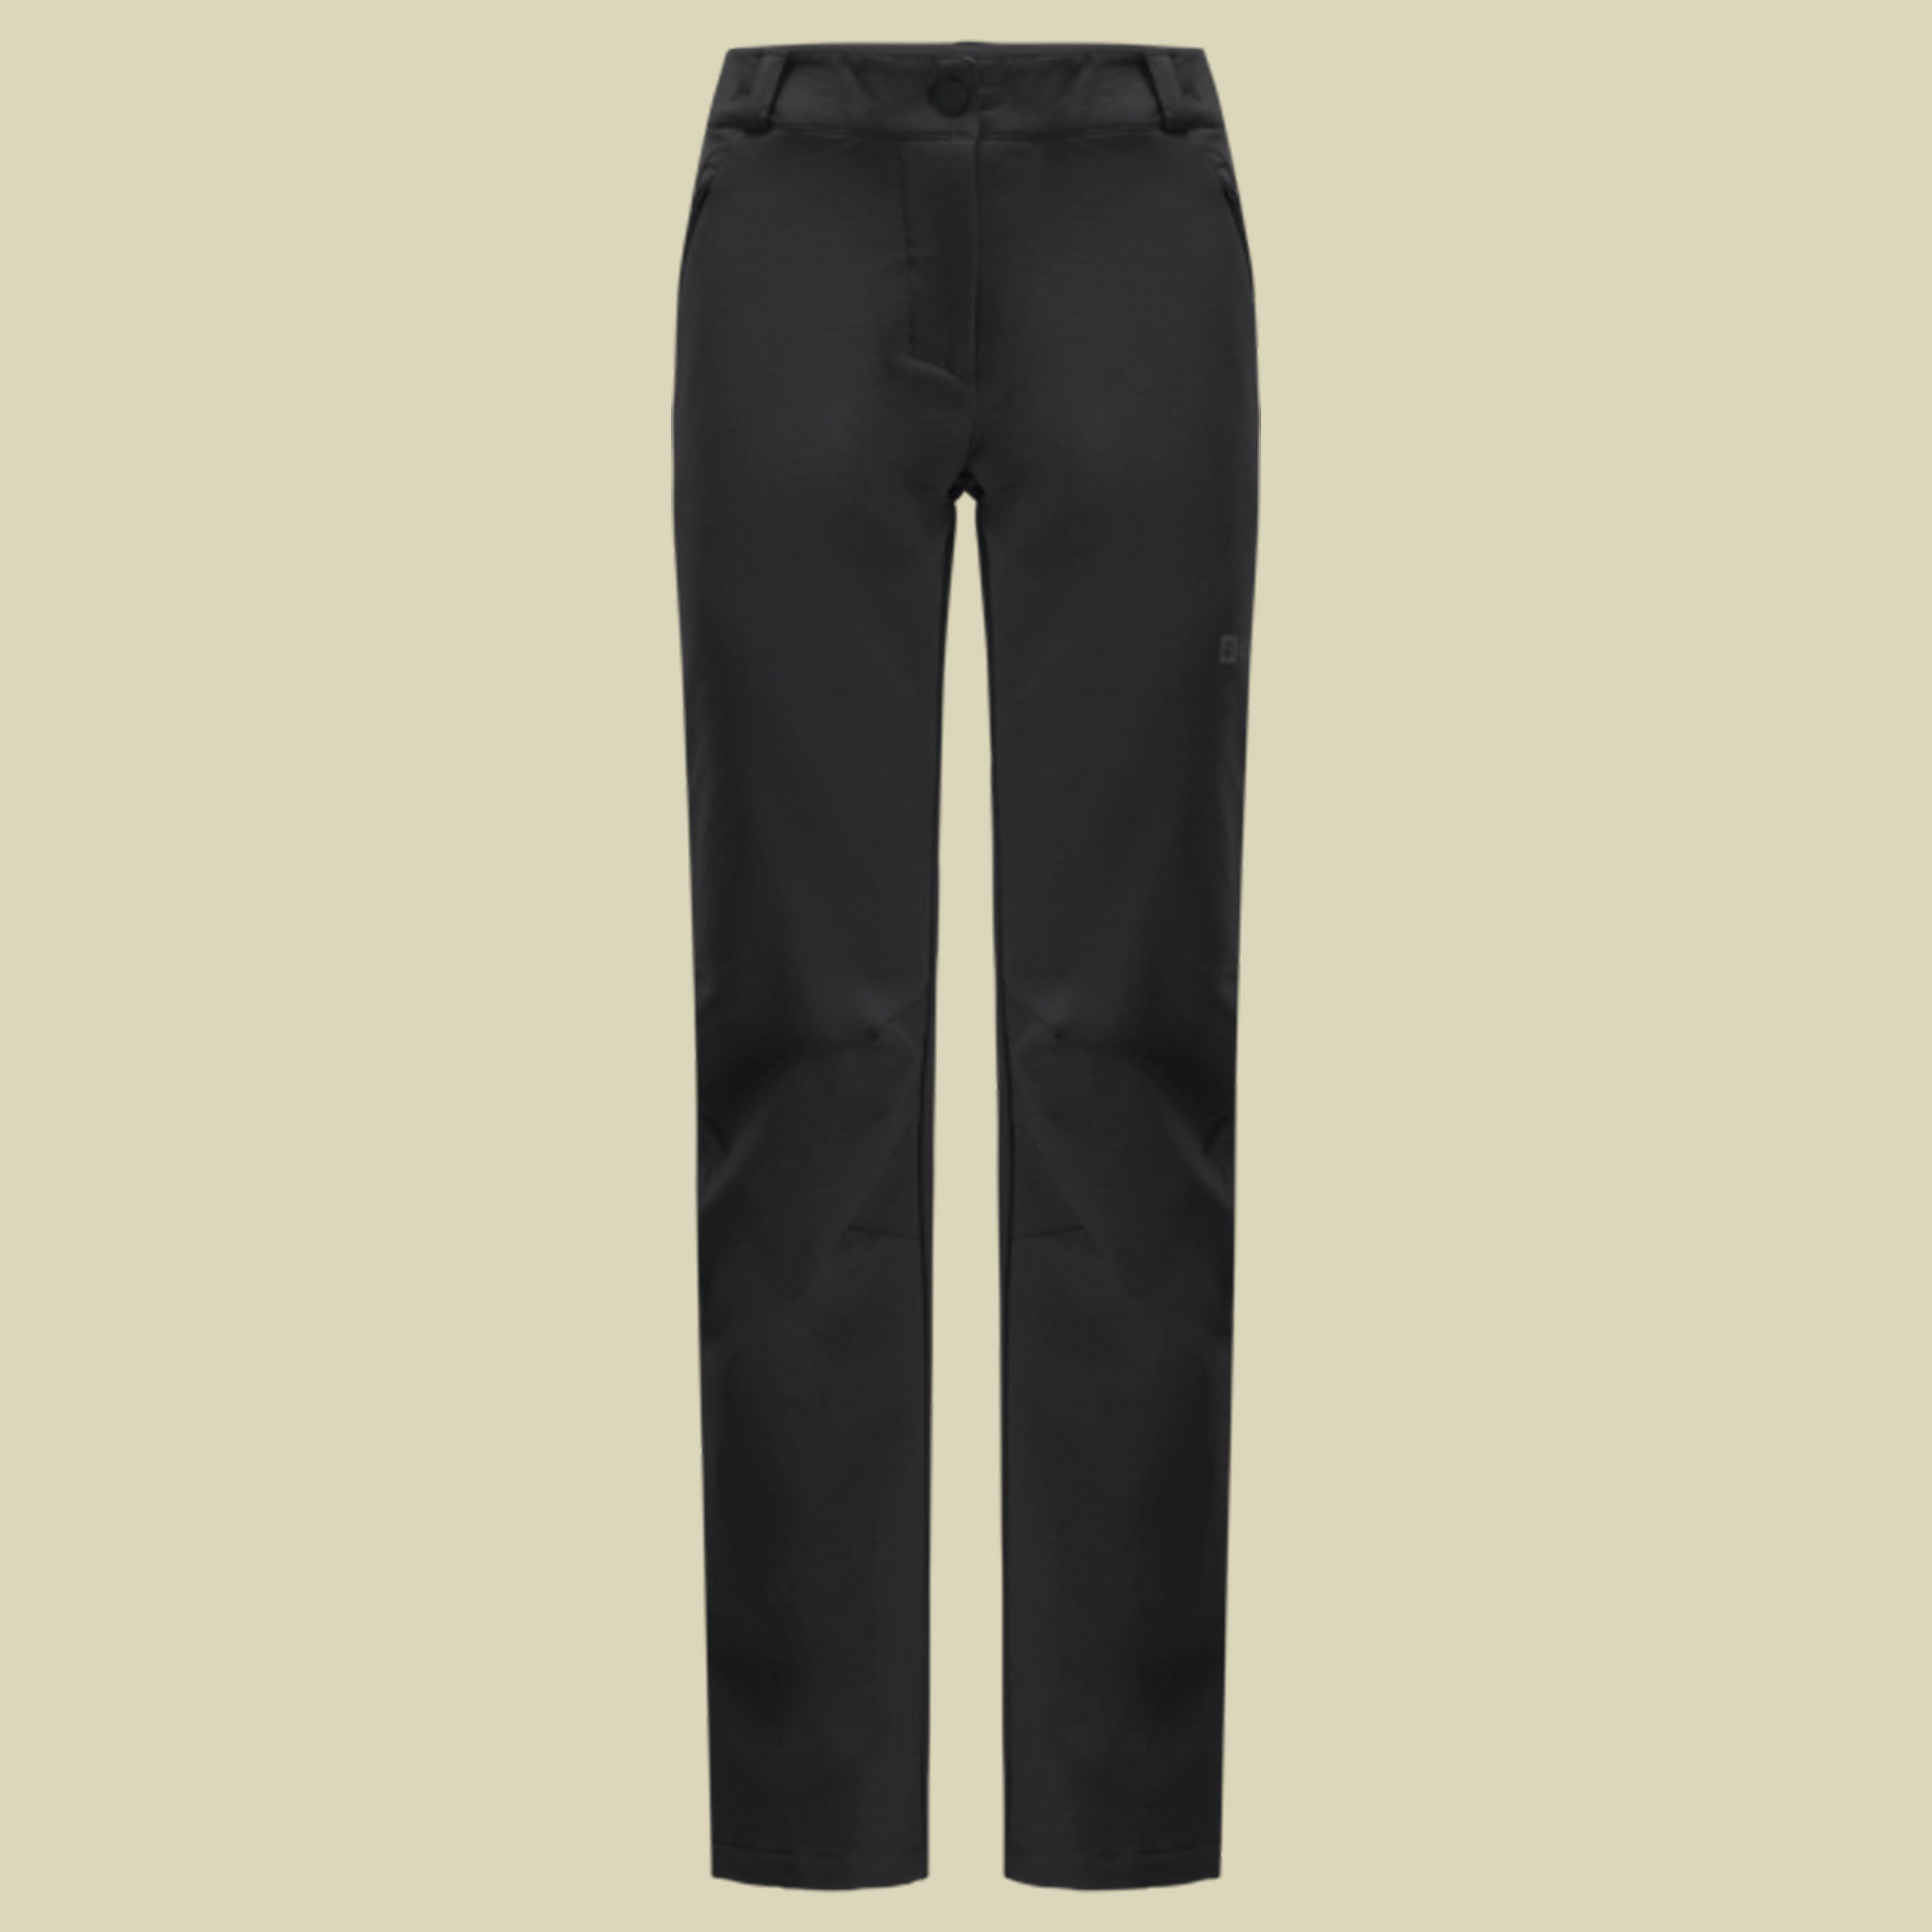 Activate Thermic Pants Women Größe 38-short Farbe black